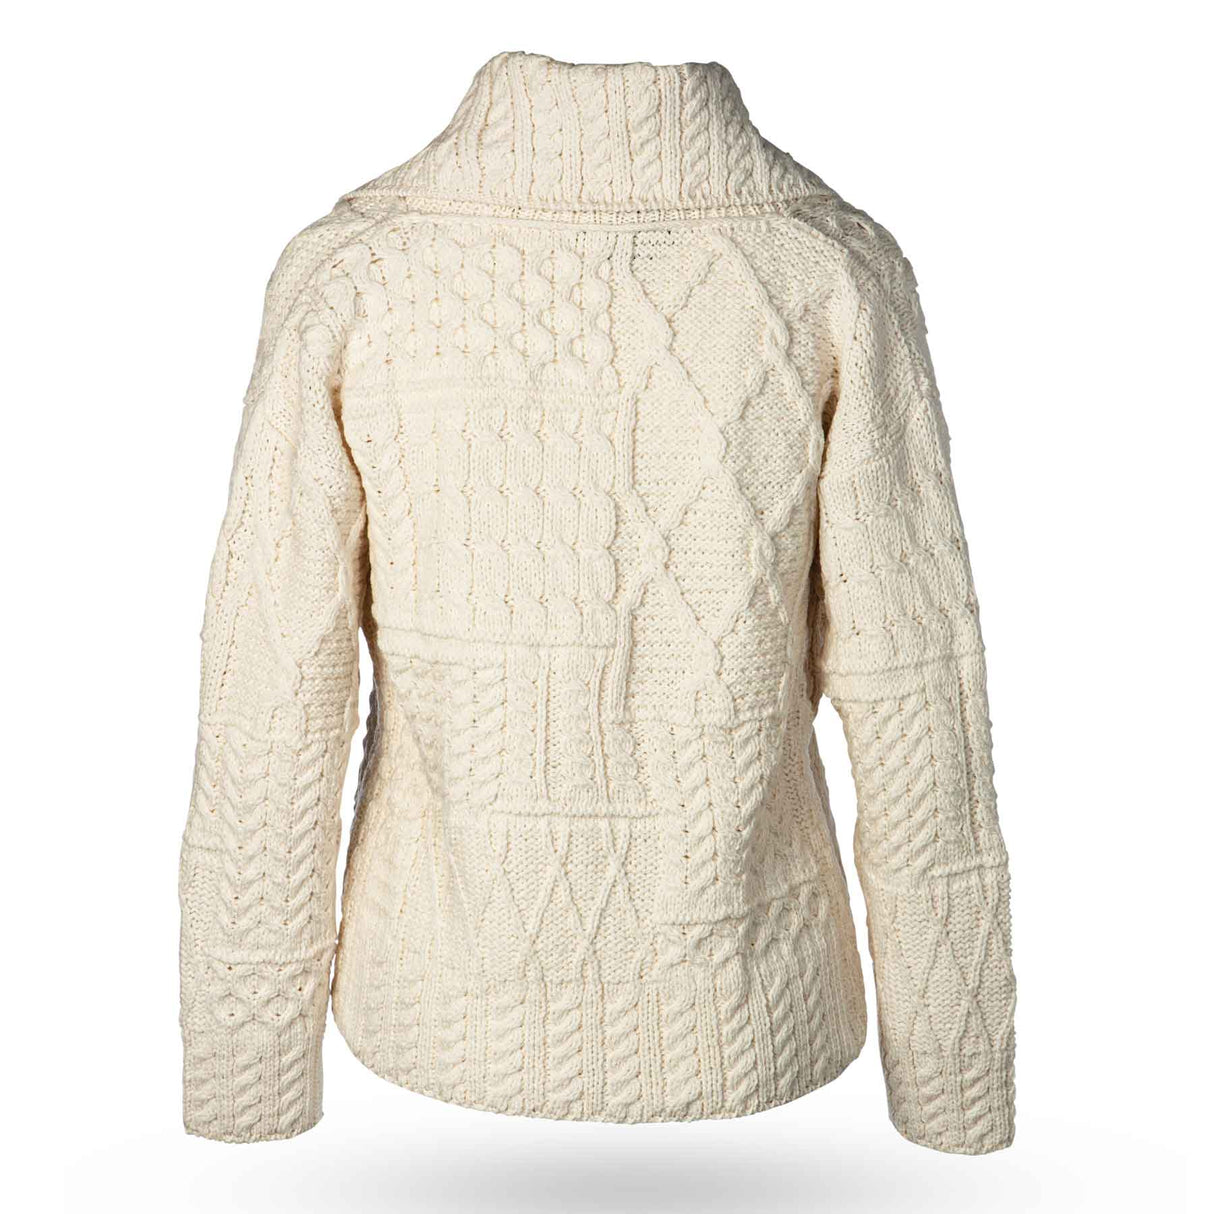 Patchwork Aran Knit Cardigan, Cream - Creative Irish Gifts